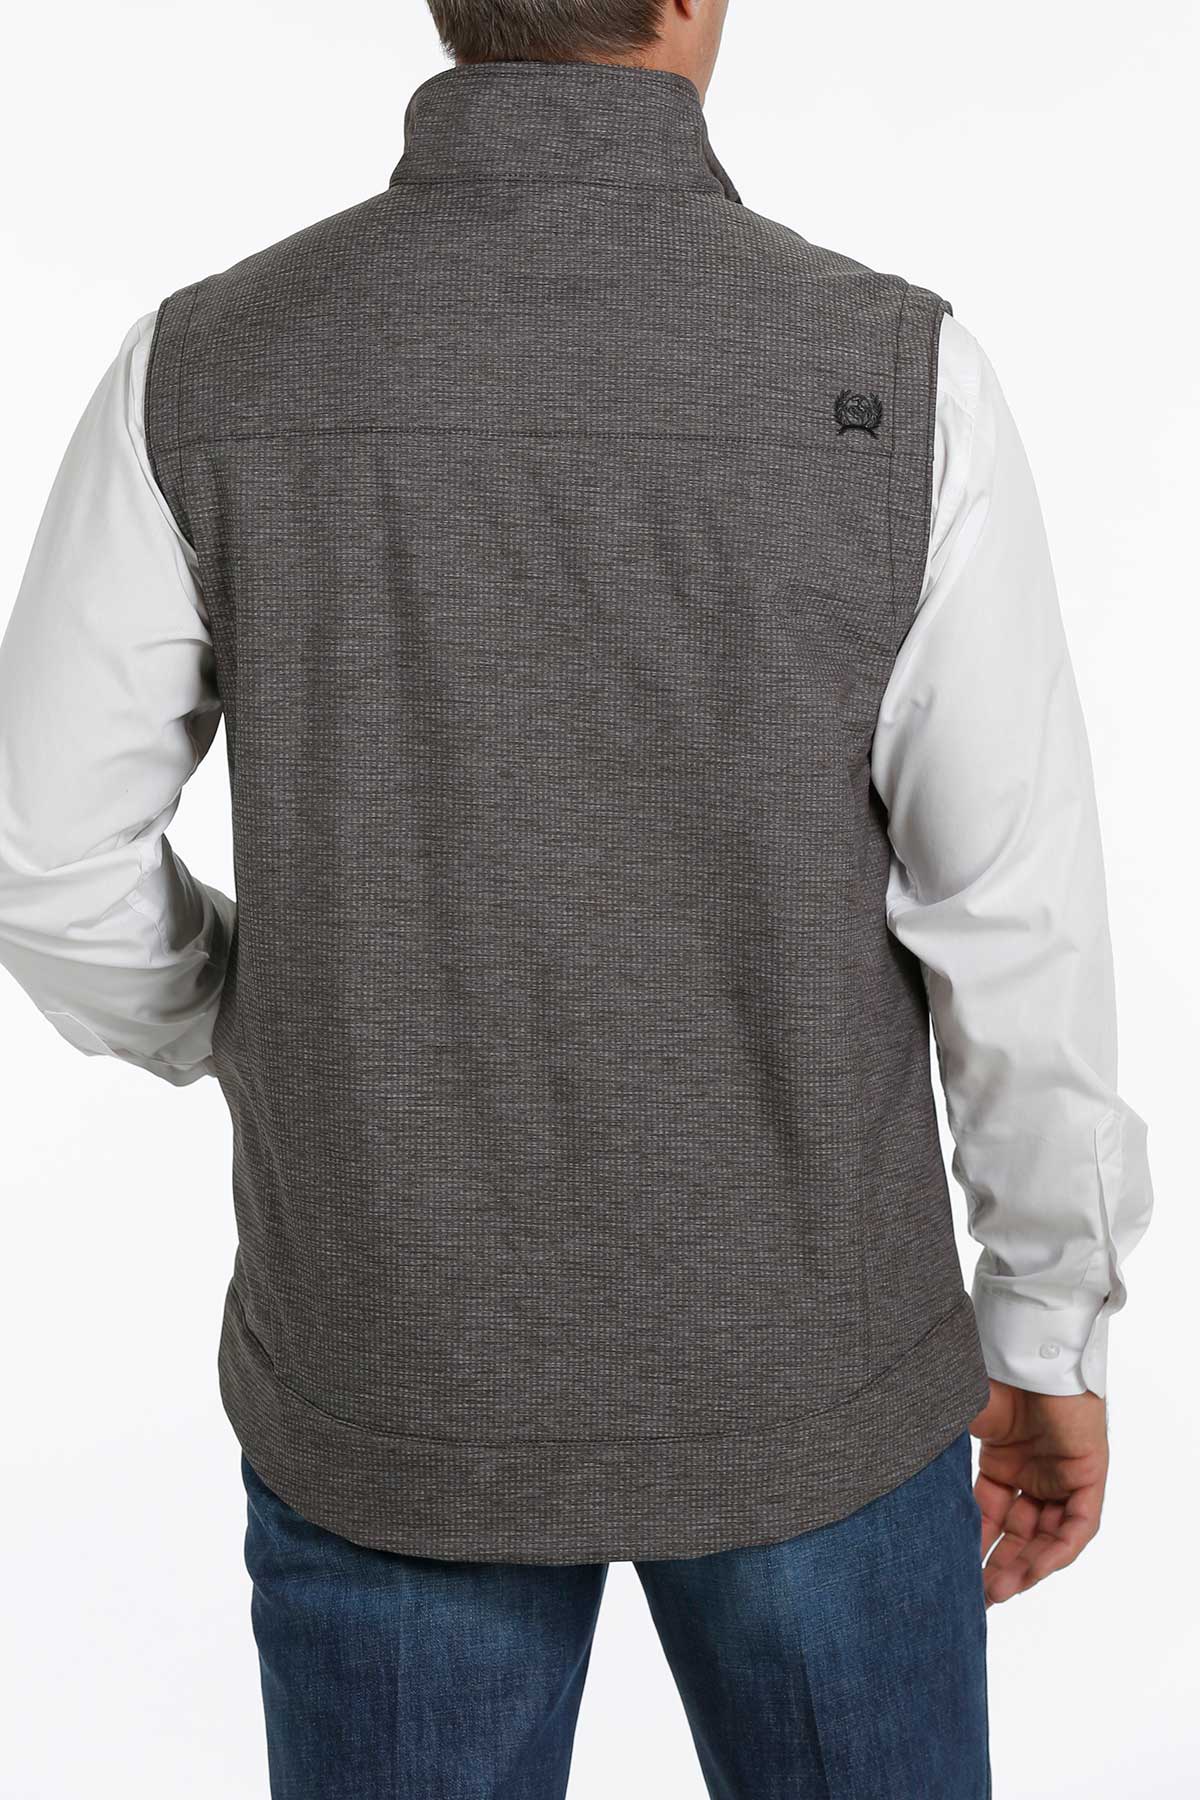 Cinch Men's Logo Texture Bonded Charcoal Vest